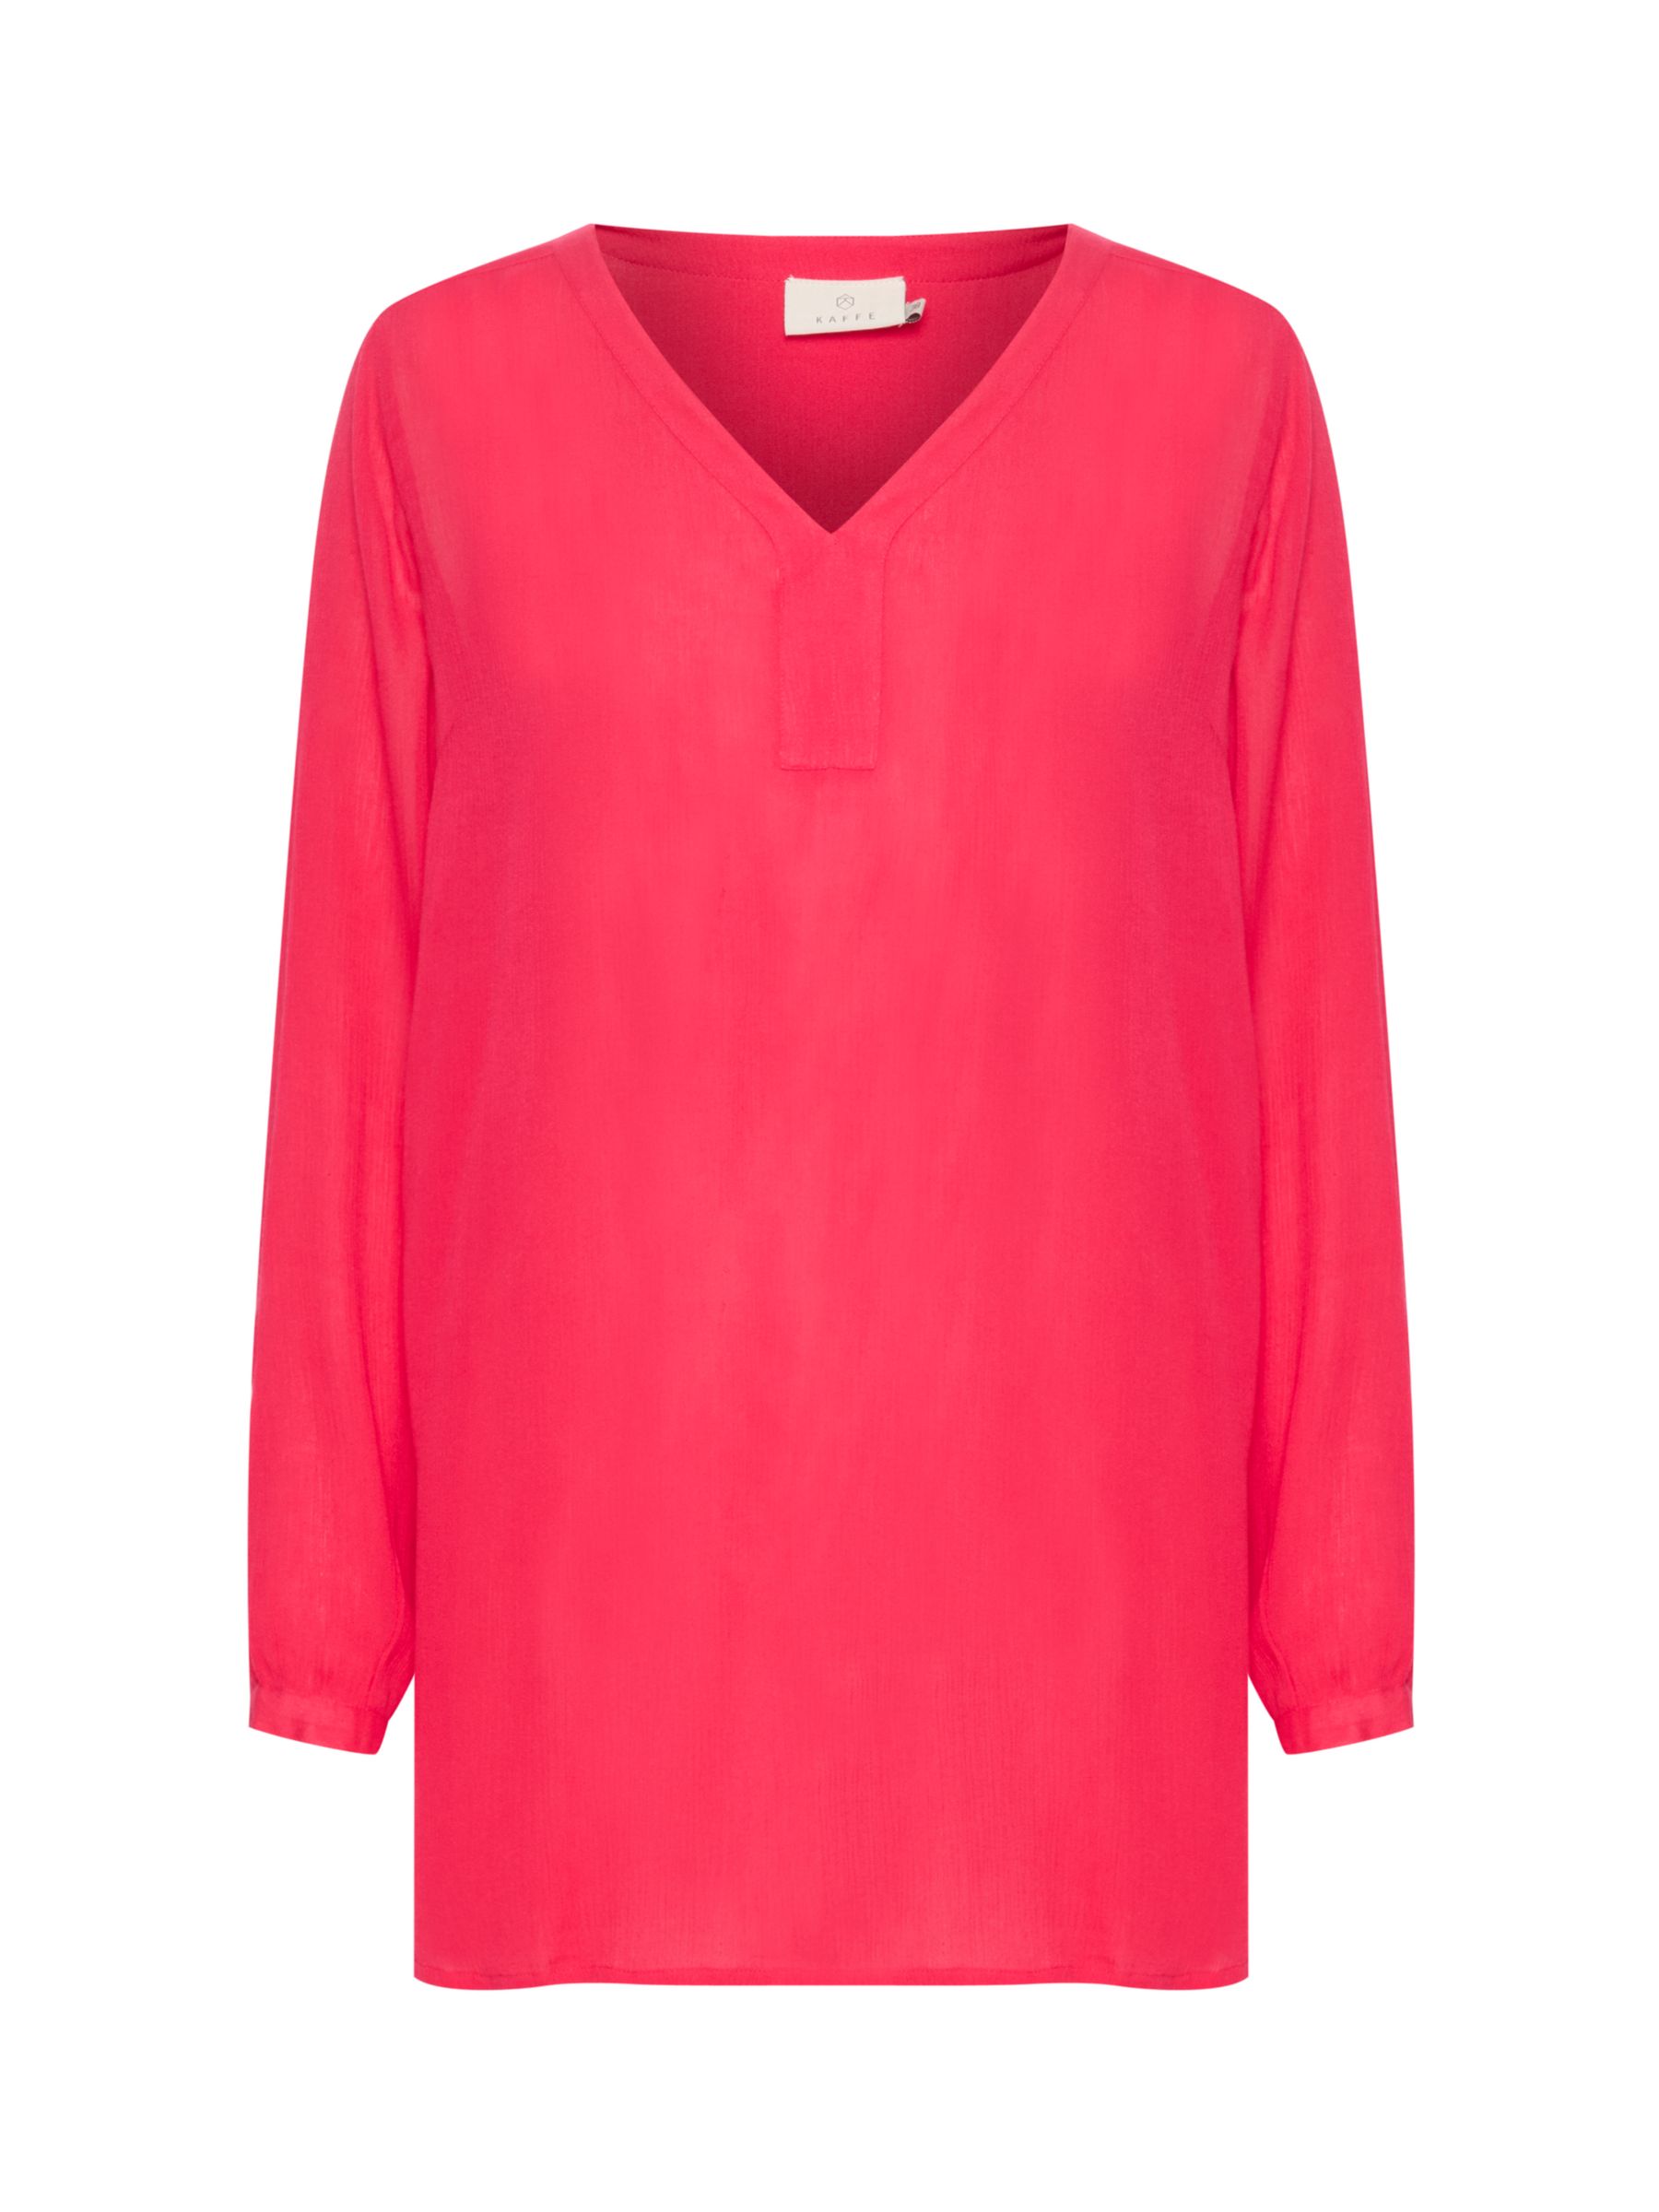 KAFFE Amber Long Sleeve Tunic Top, Virtual Pink at John Lewis & Partners